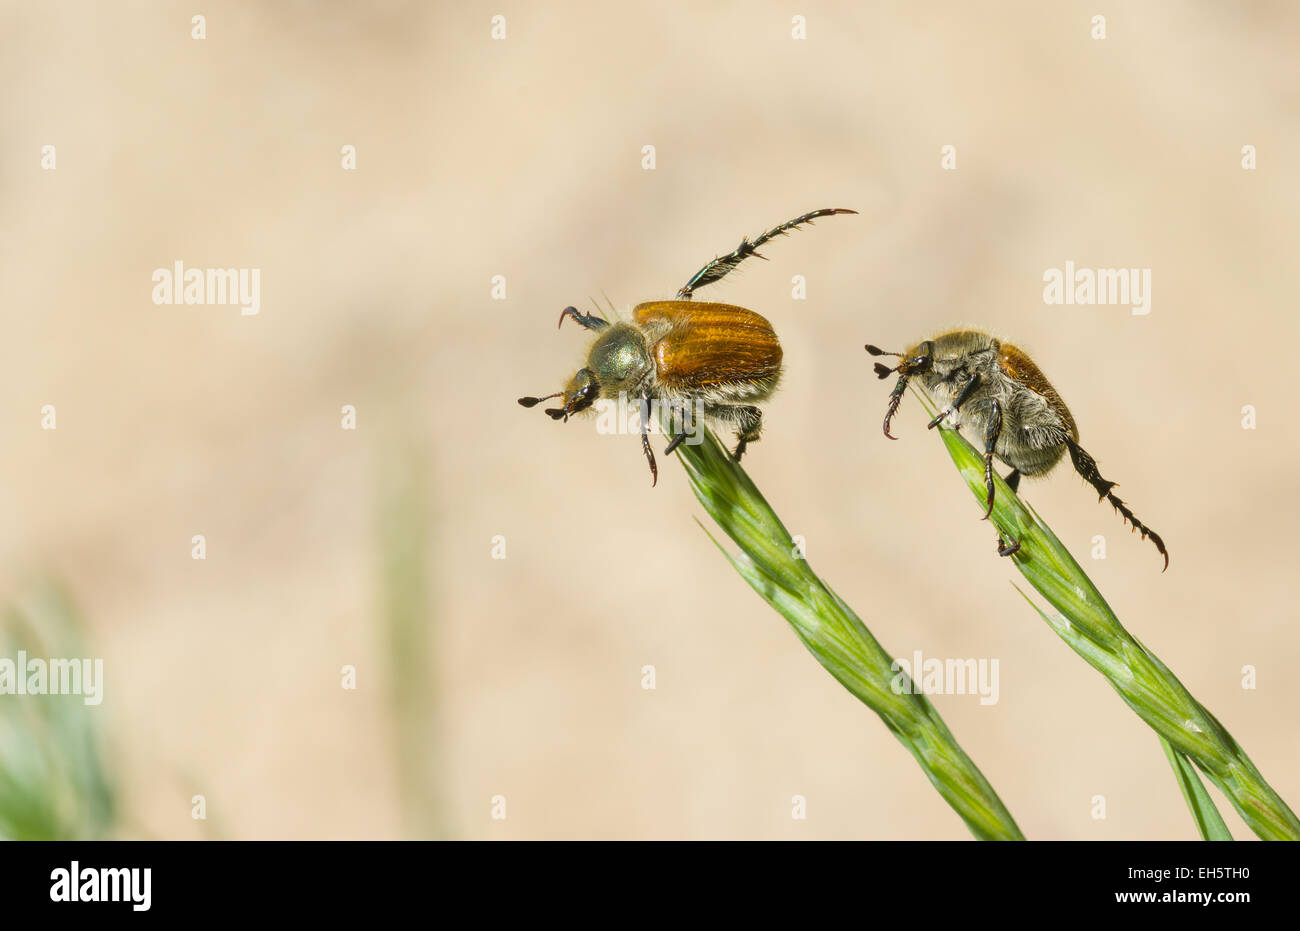 Wildlife acrobatic duet - two fat beetles doing everyday exercises Stock Photo